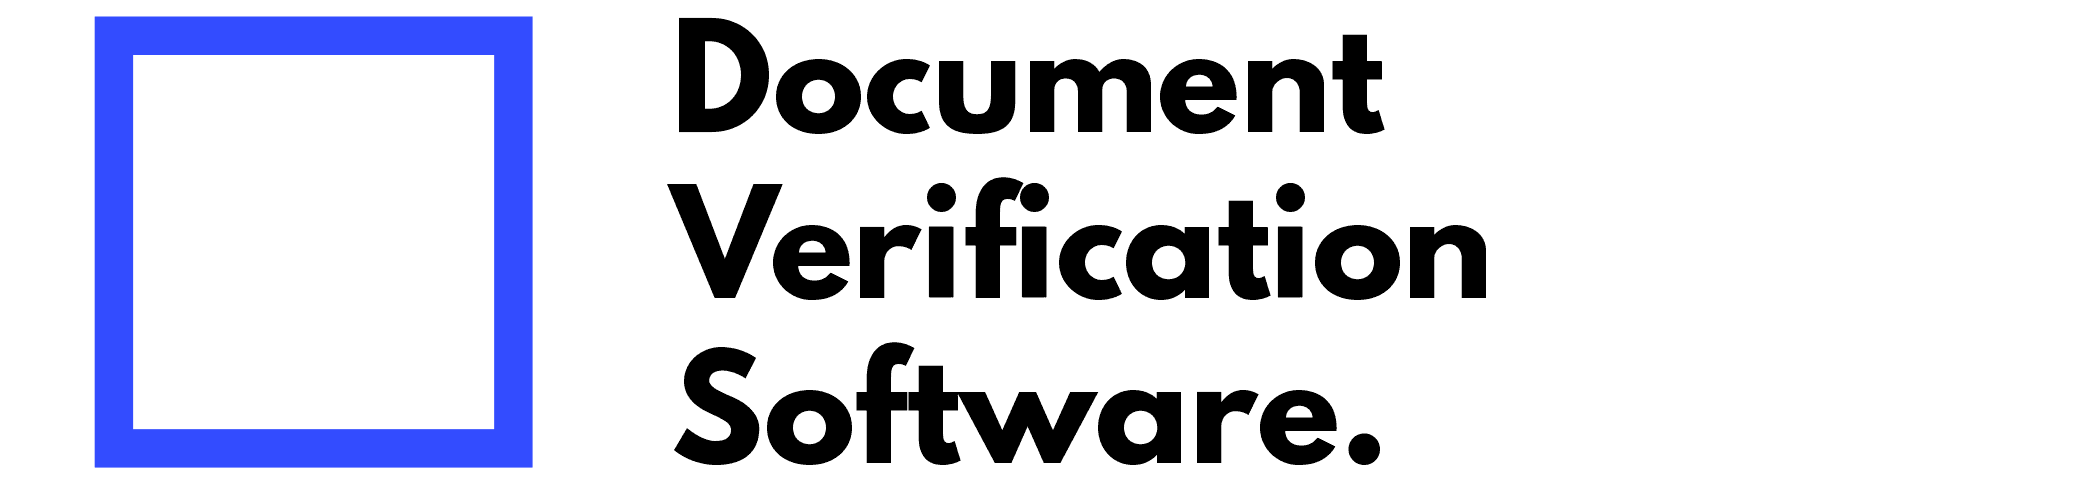 Document Verification Software